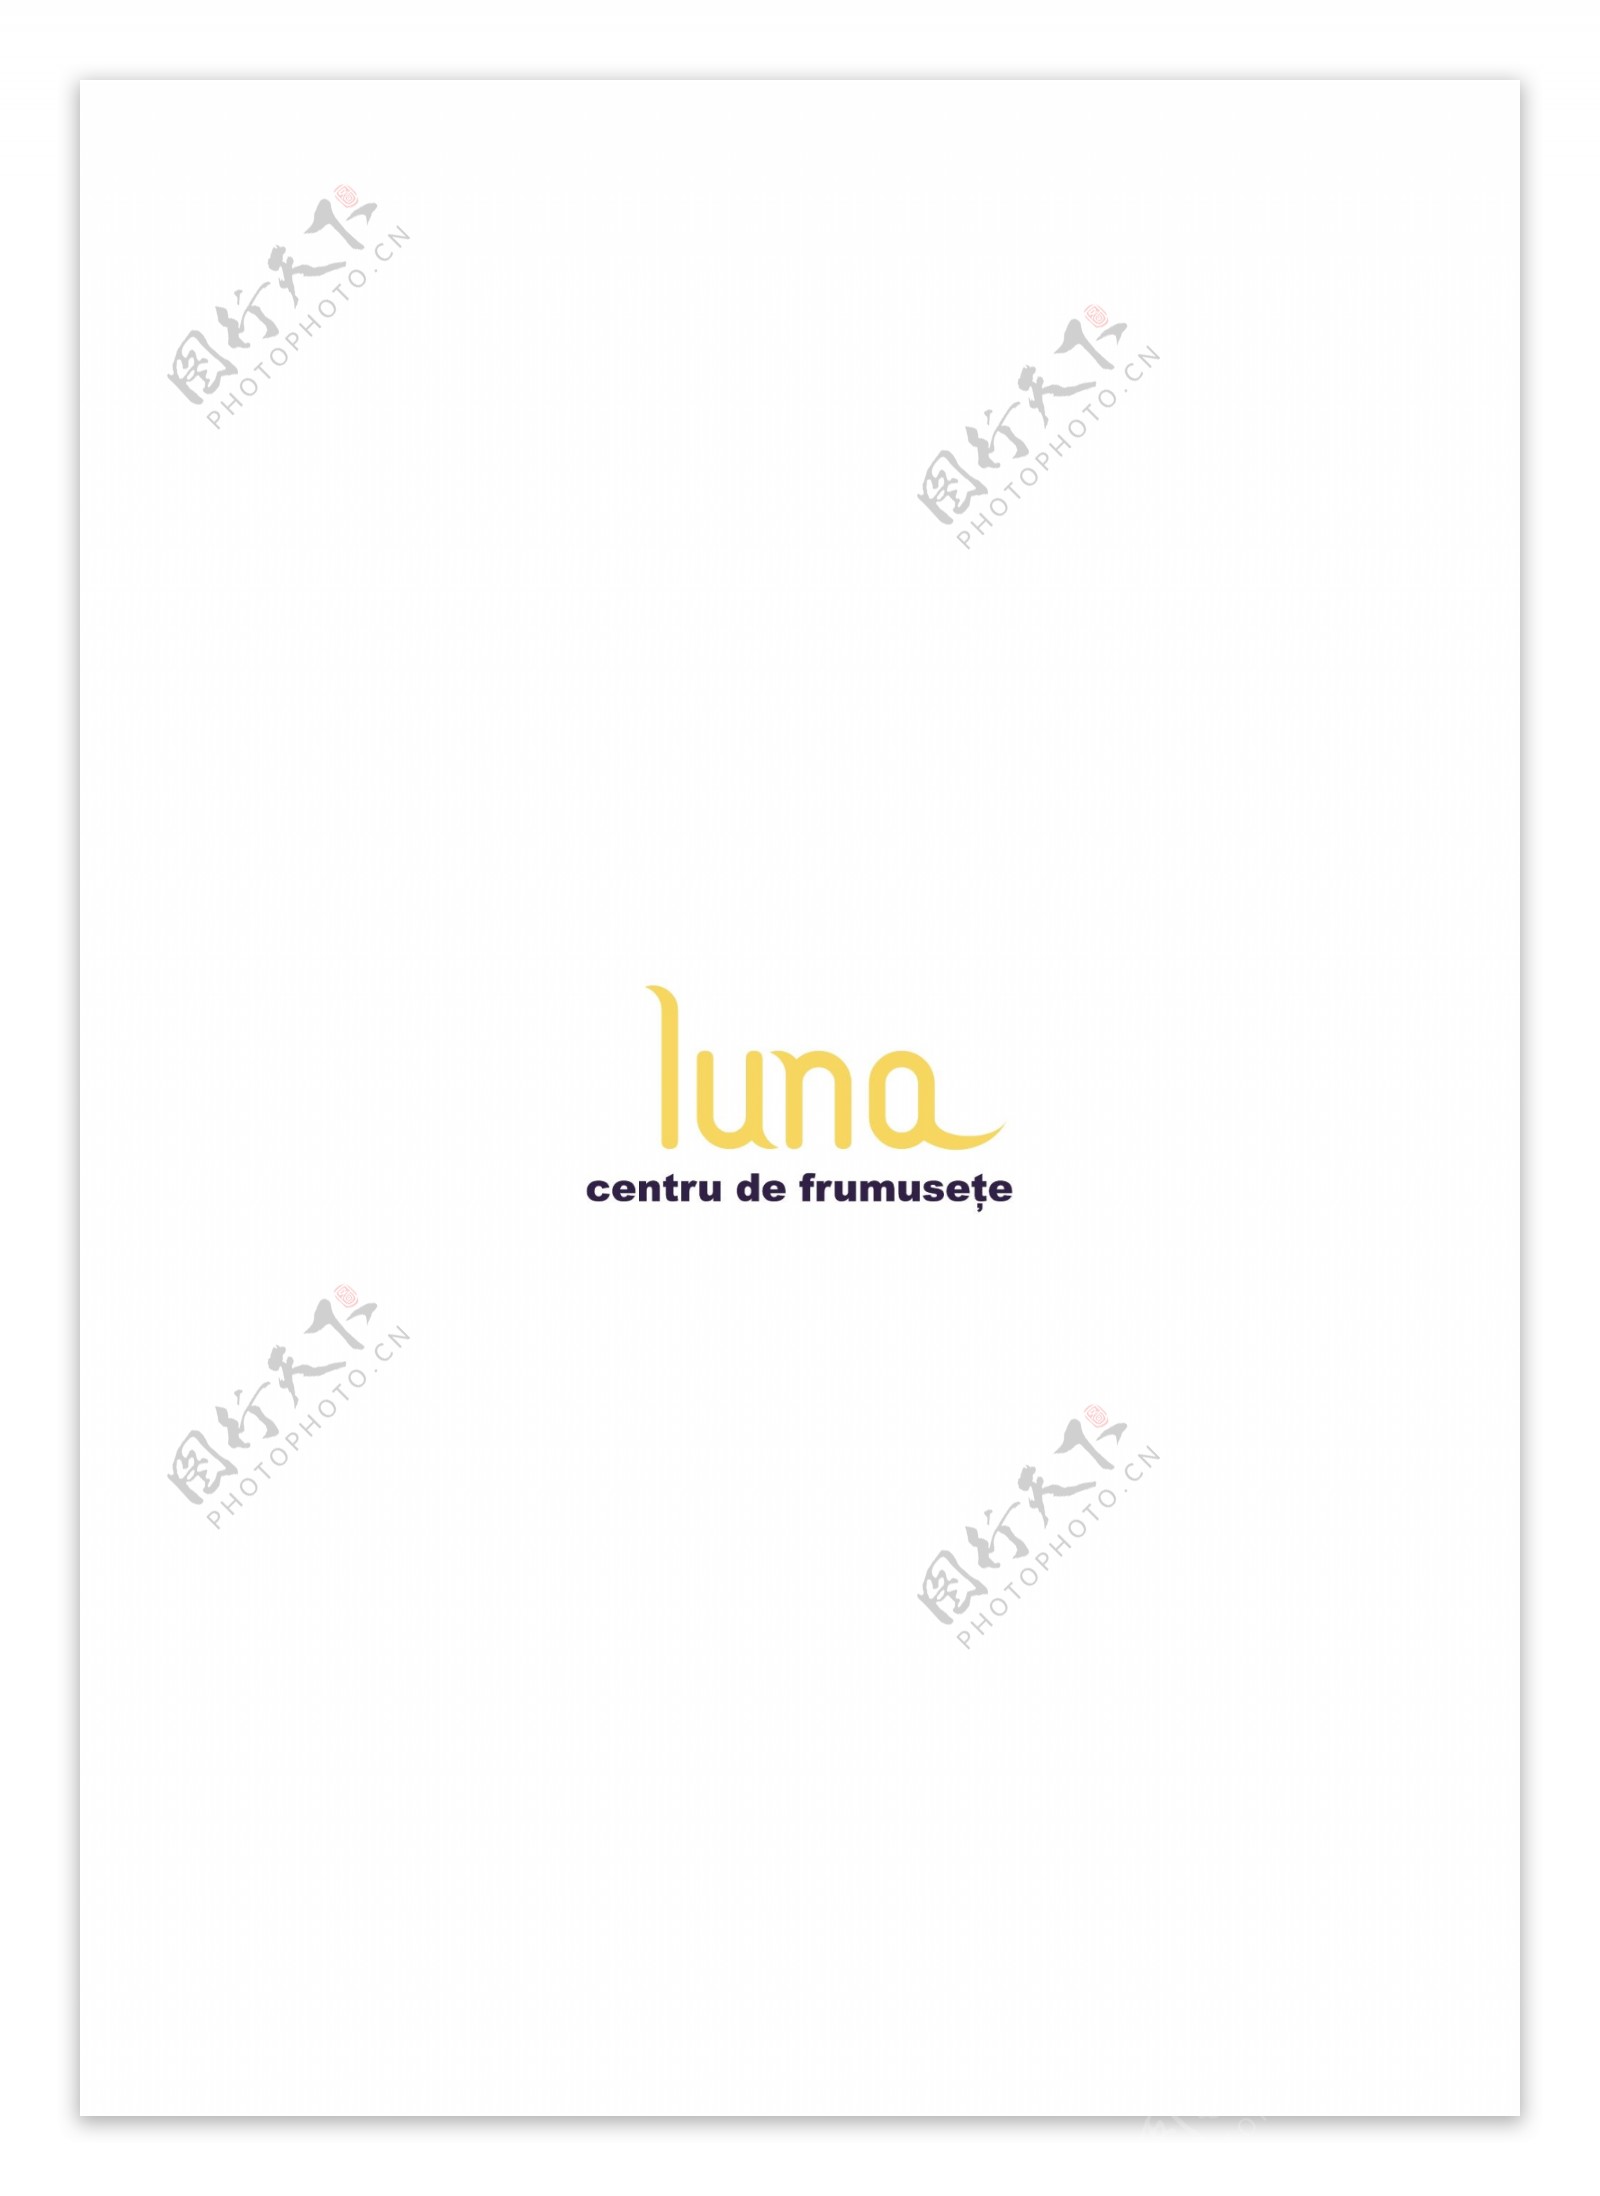 LunaBeautyCenterlogo设计欣赏LunaBeautyCenter卫生机构标志下载标志设计欣赏